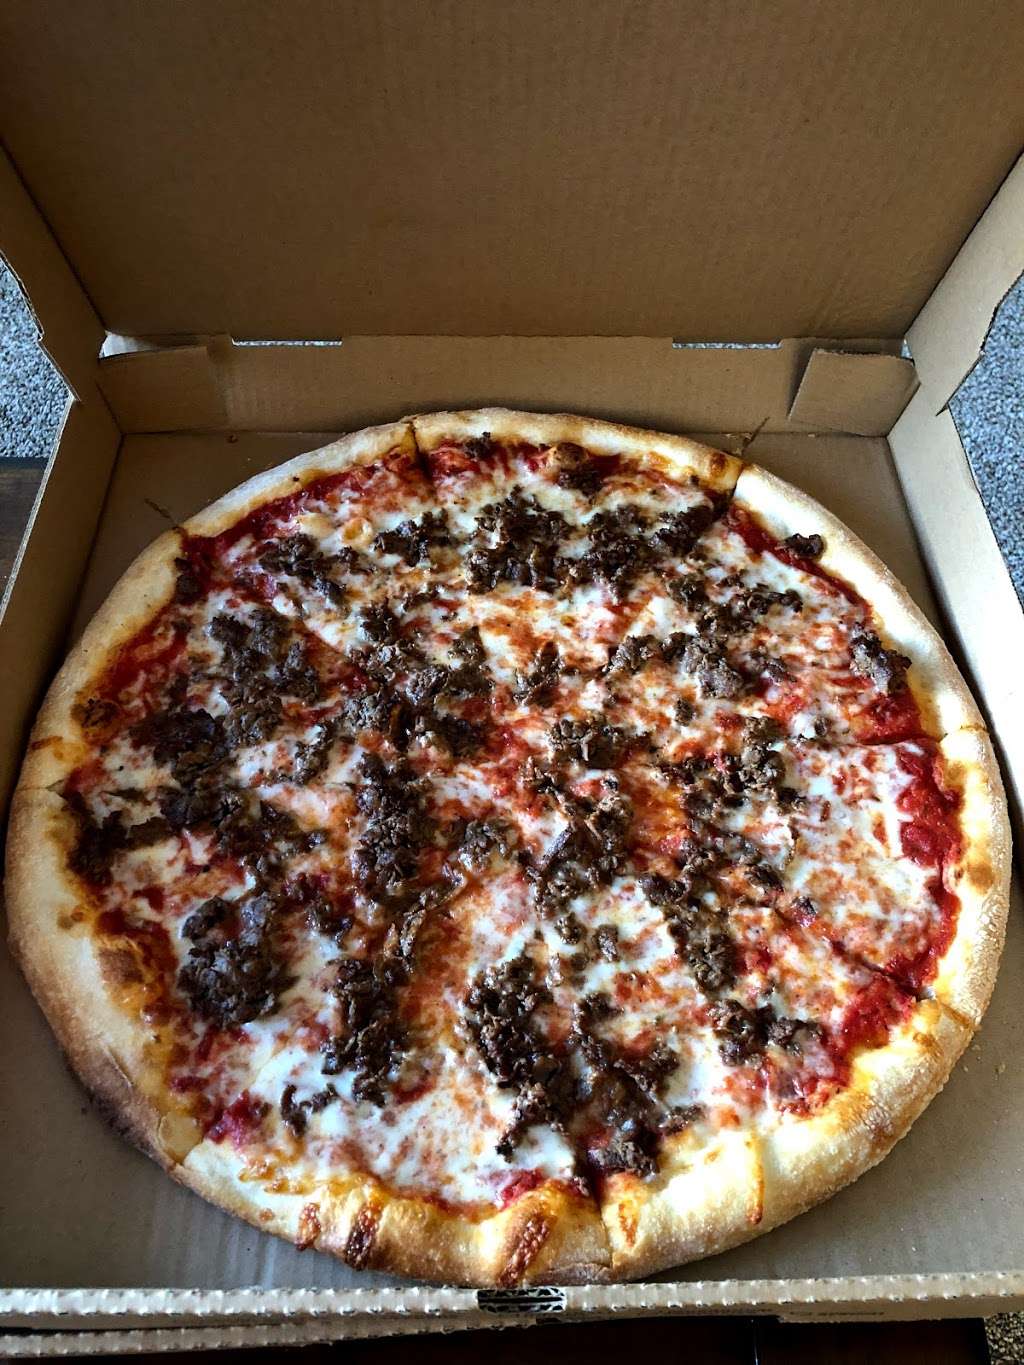 Carettis Pizza and Restaurant | 2625 Philadelphia Ave, Chambersburg, PA 17201 | Phone: (717) 263-9553